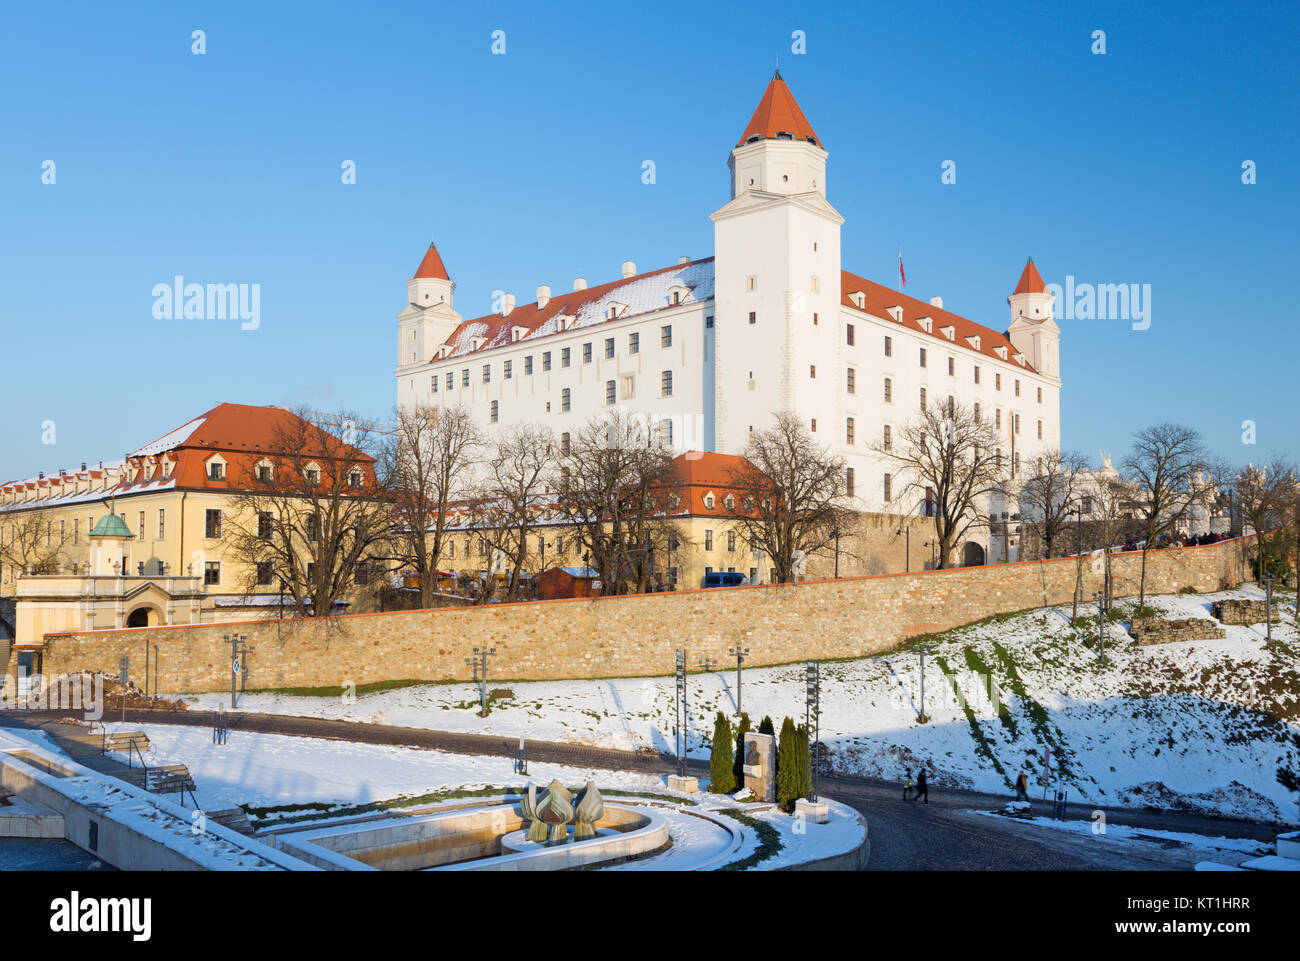 Bratislava - das Schloss im Winter Licht. Stockfoto